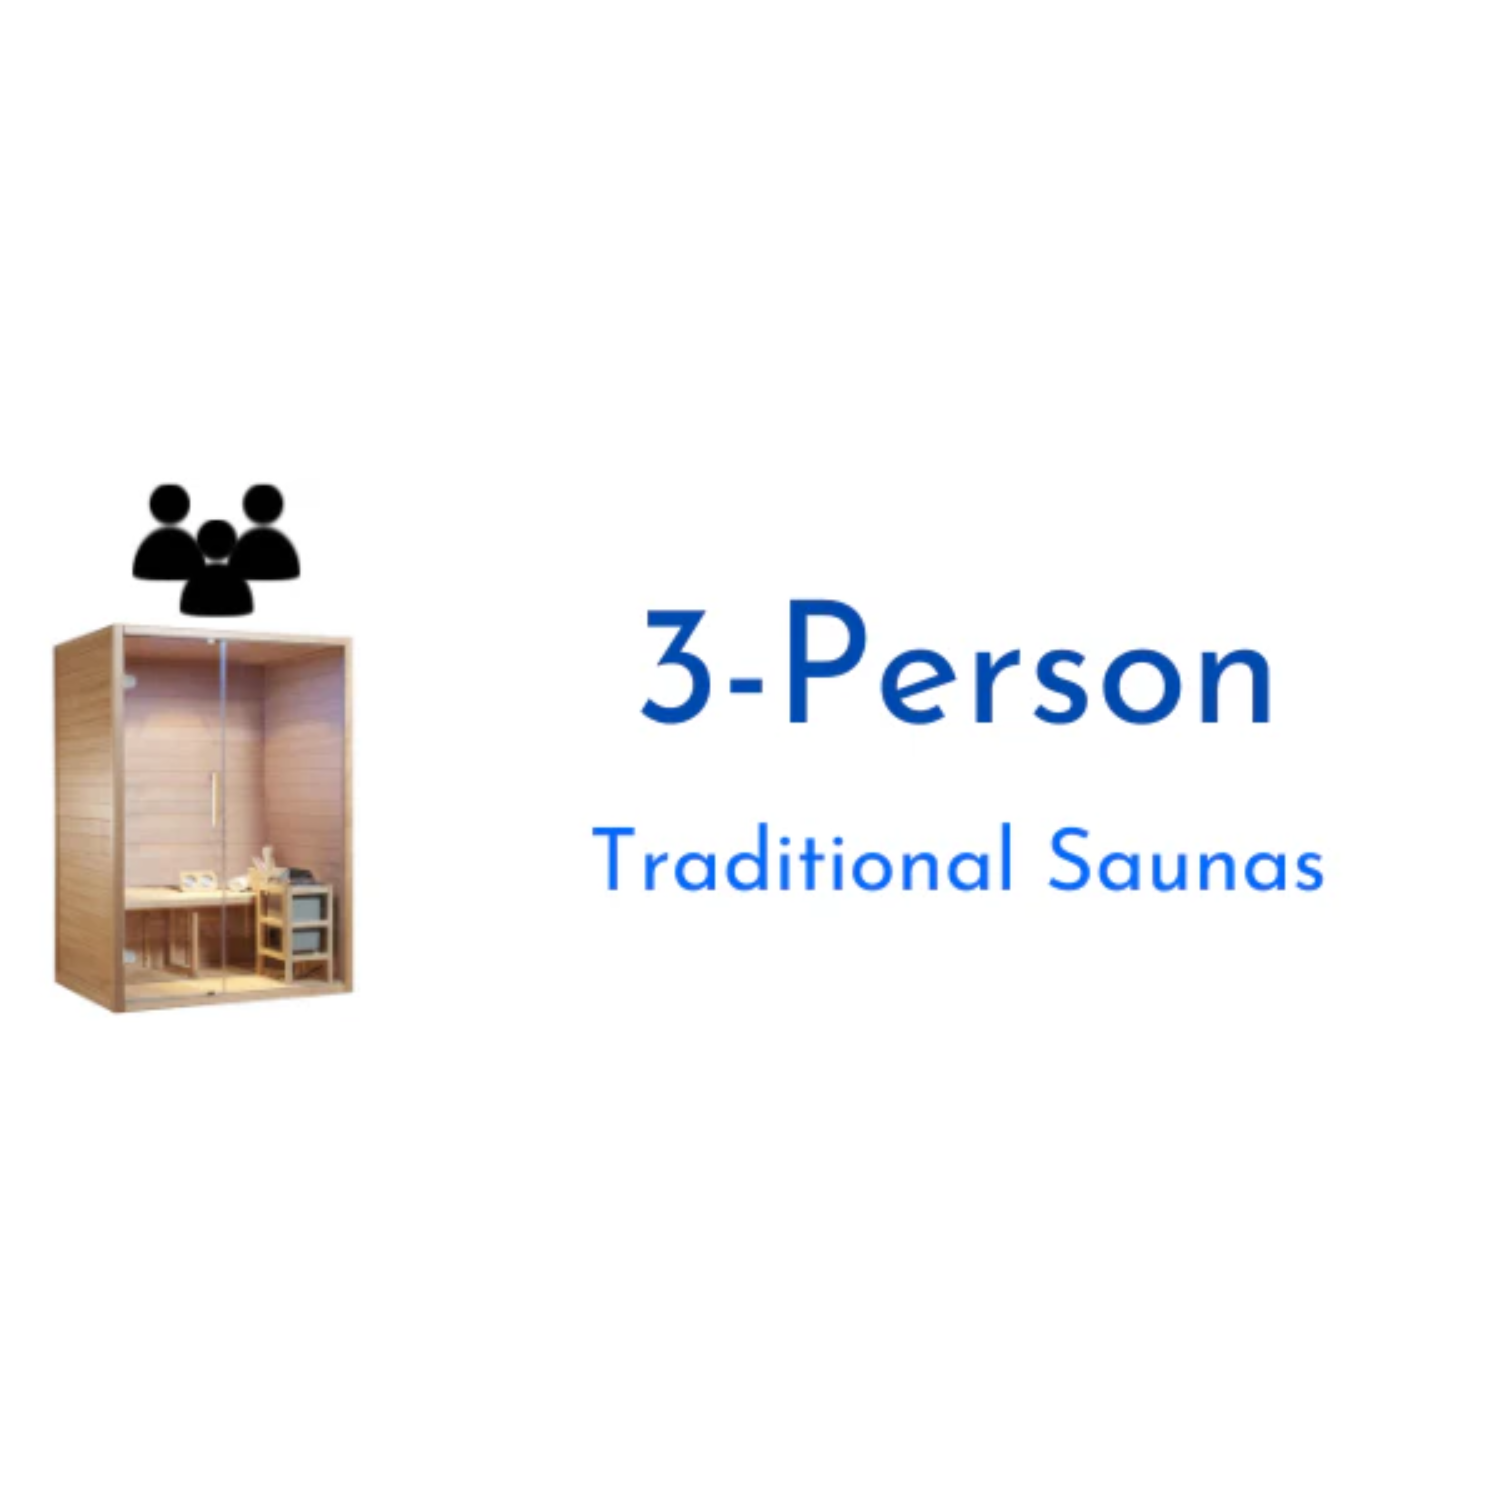 3-Person Traditional Saunas